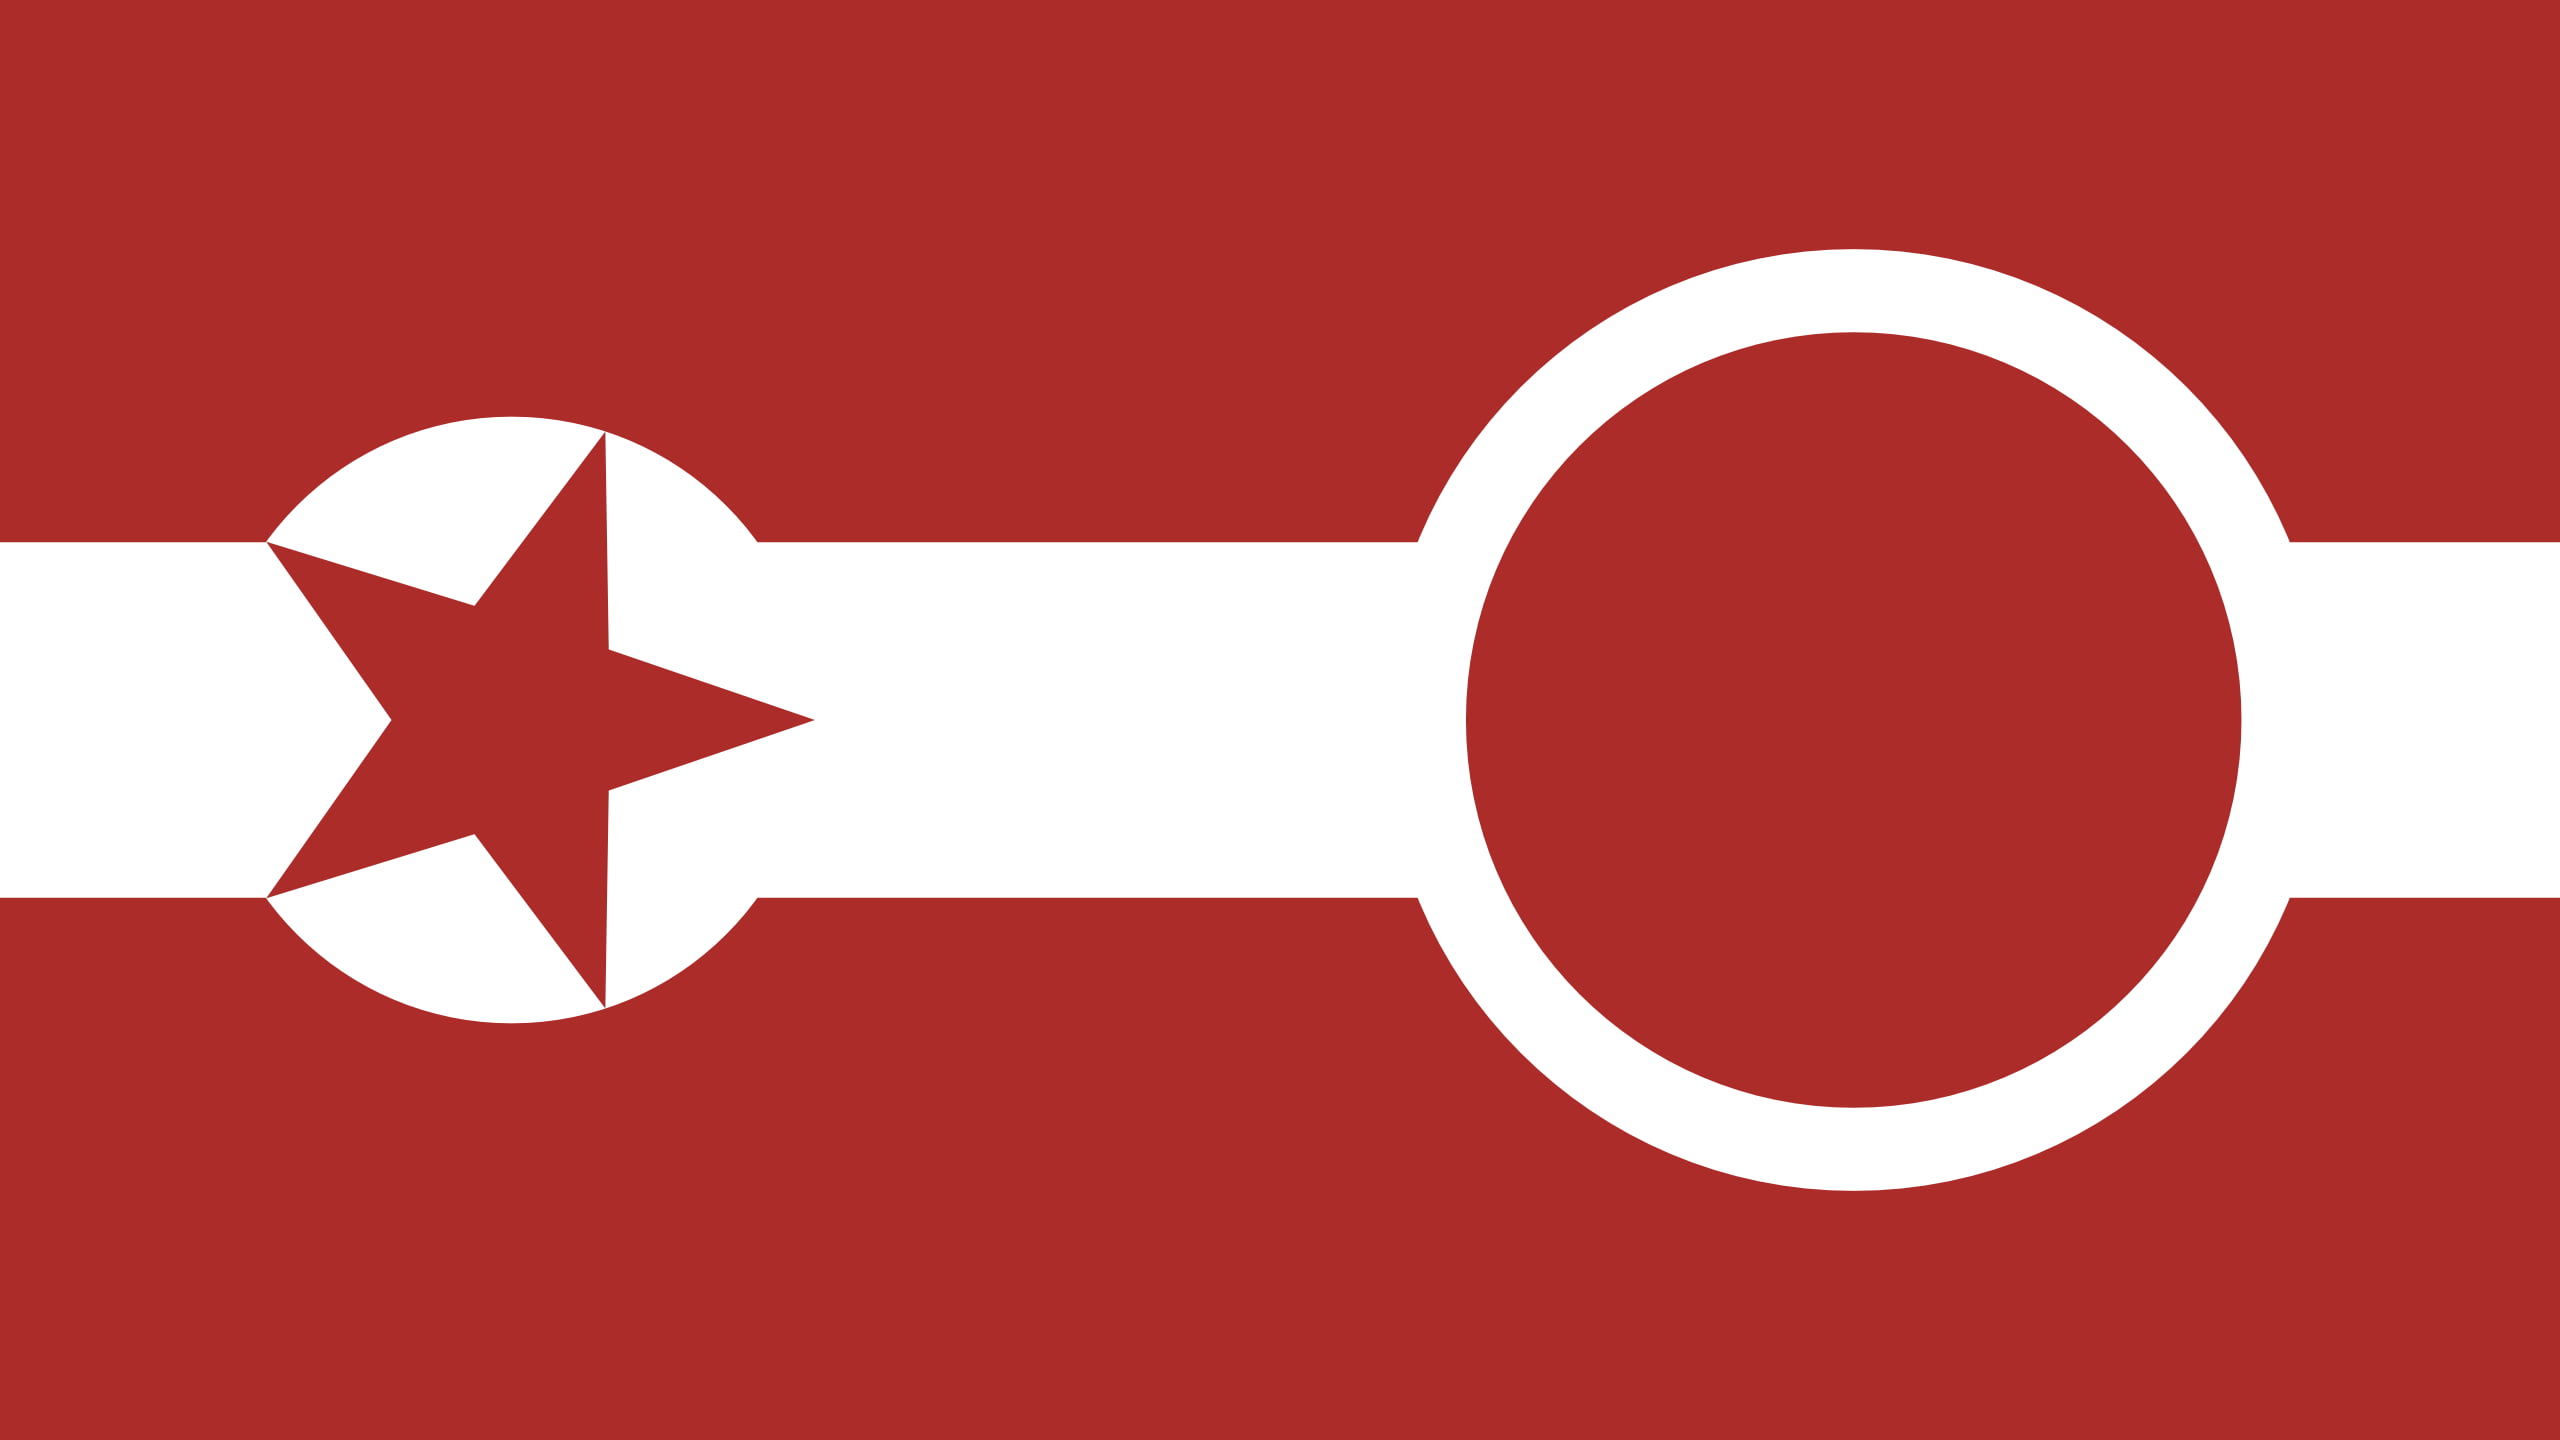 red and white star logo, minimalism, Mars, flag